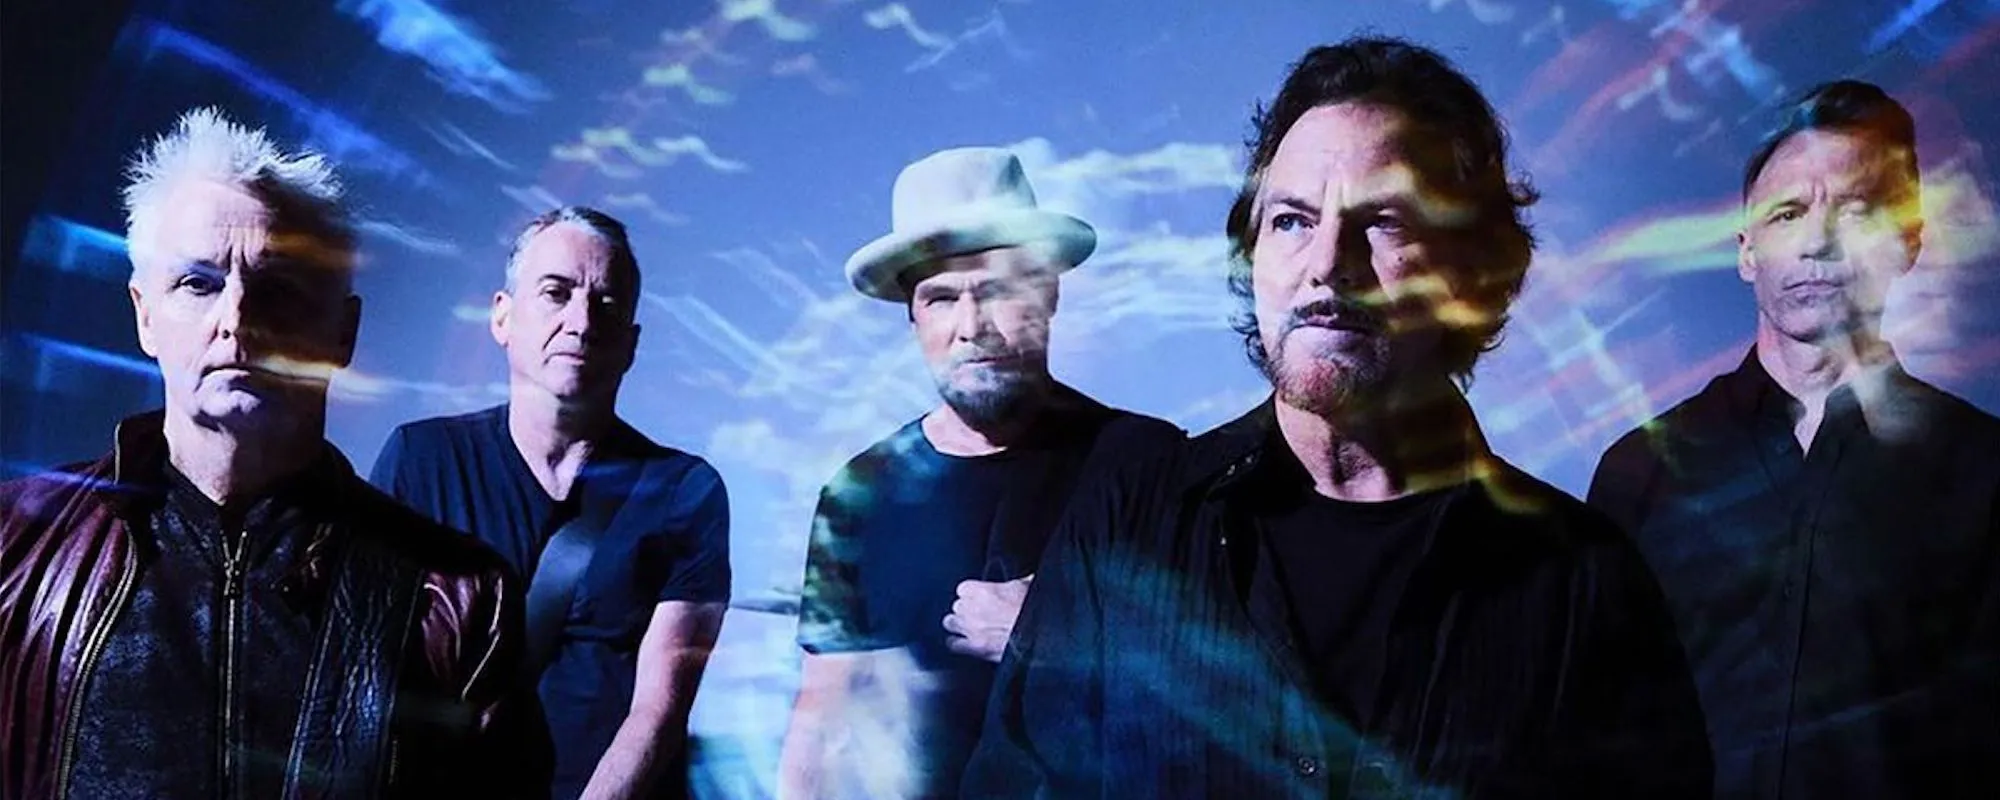 Pearl Jam Return with 12th Album ‘Dark Matter,’ Share Title Track